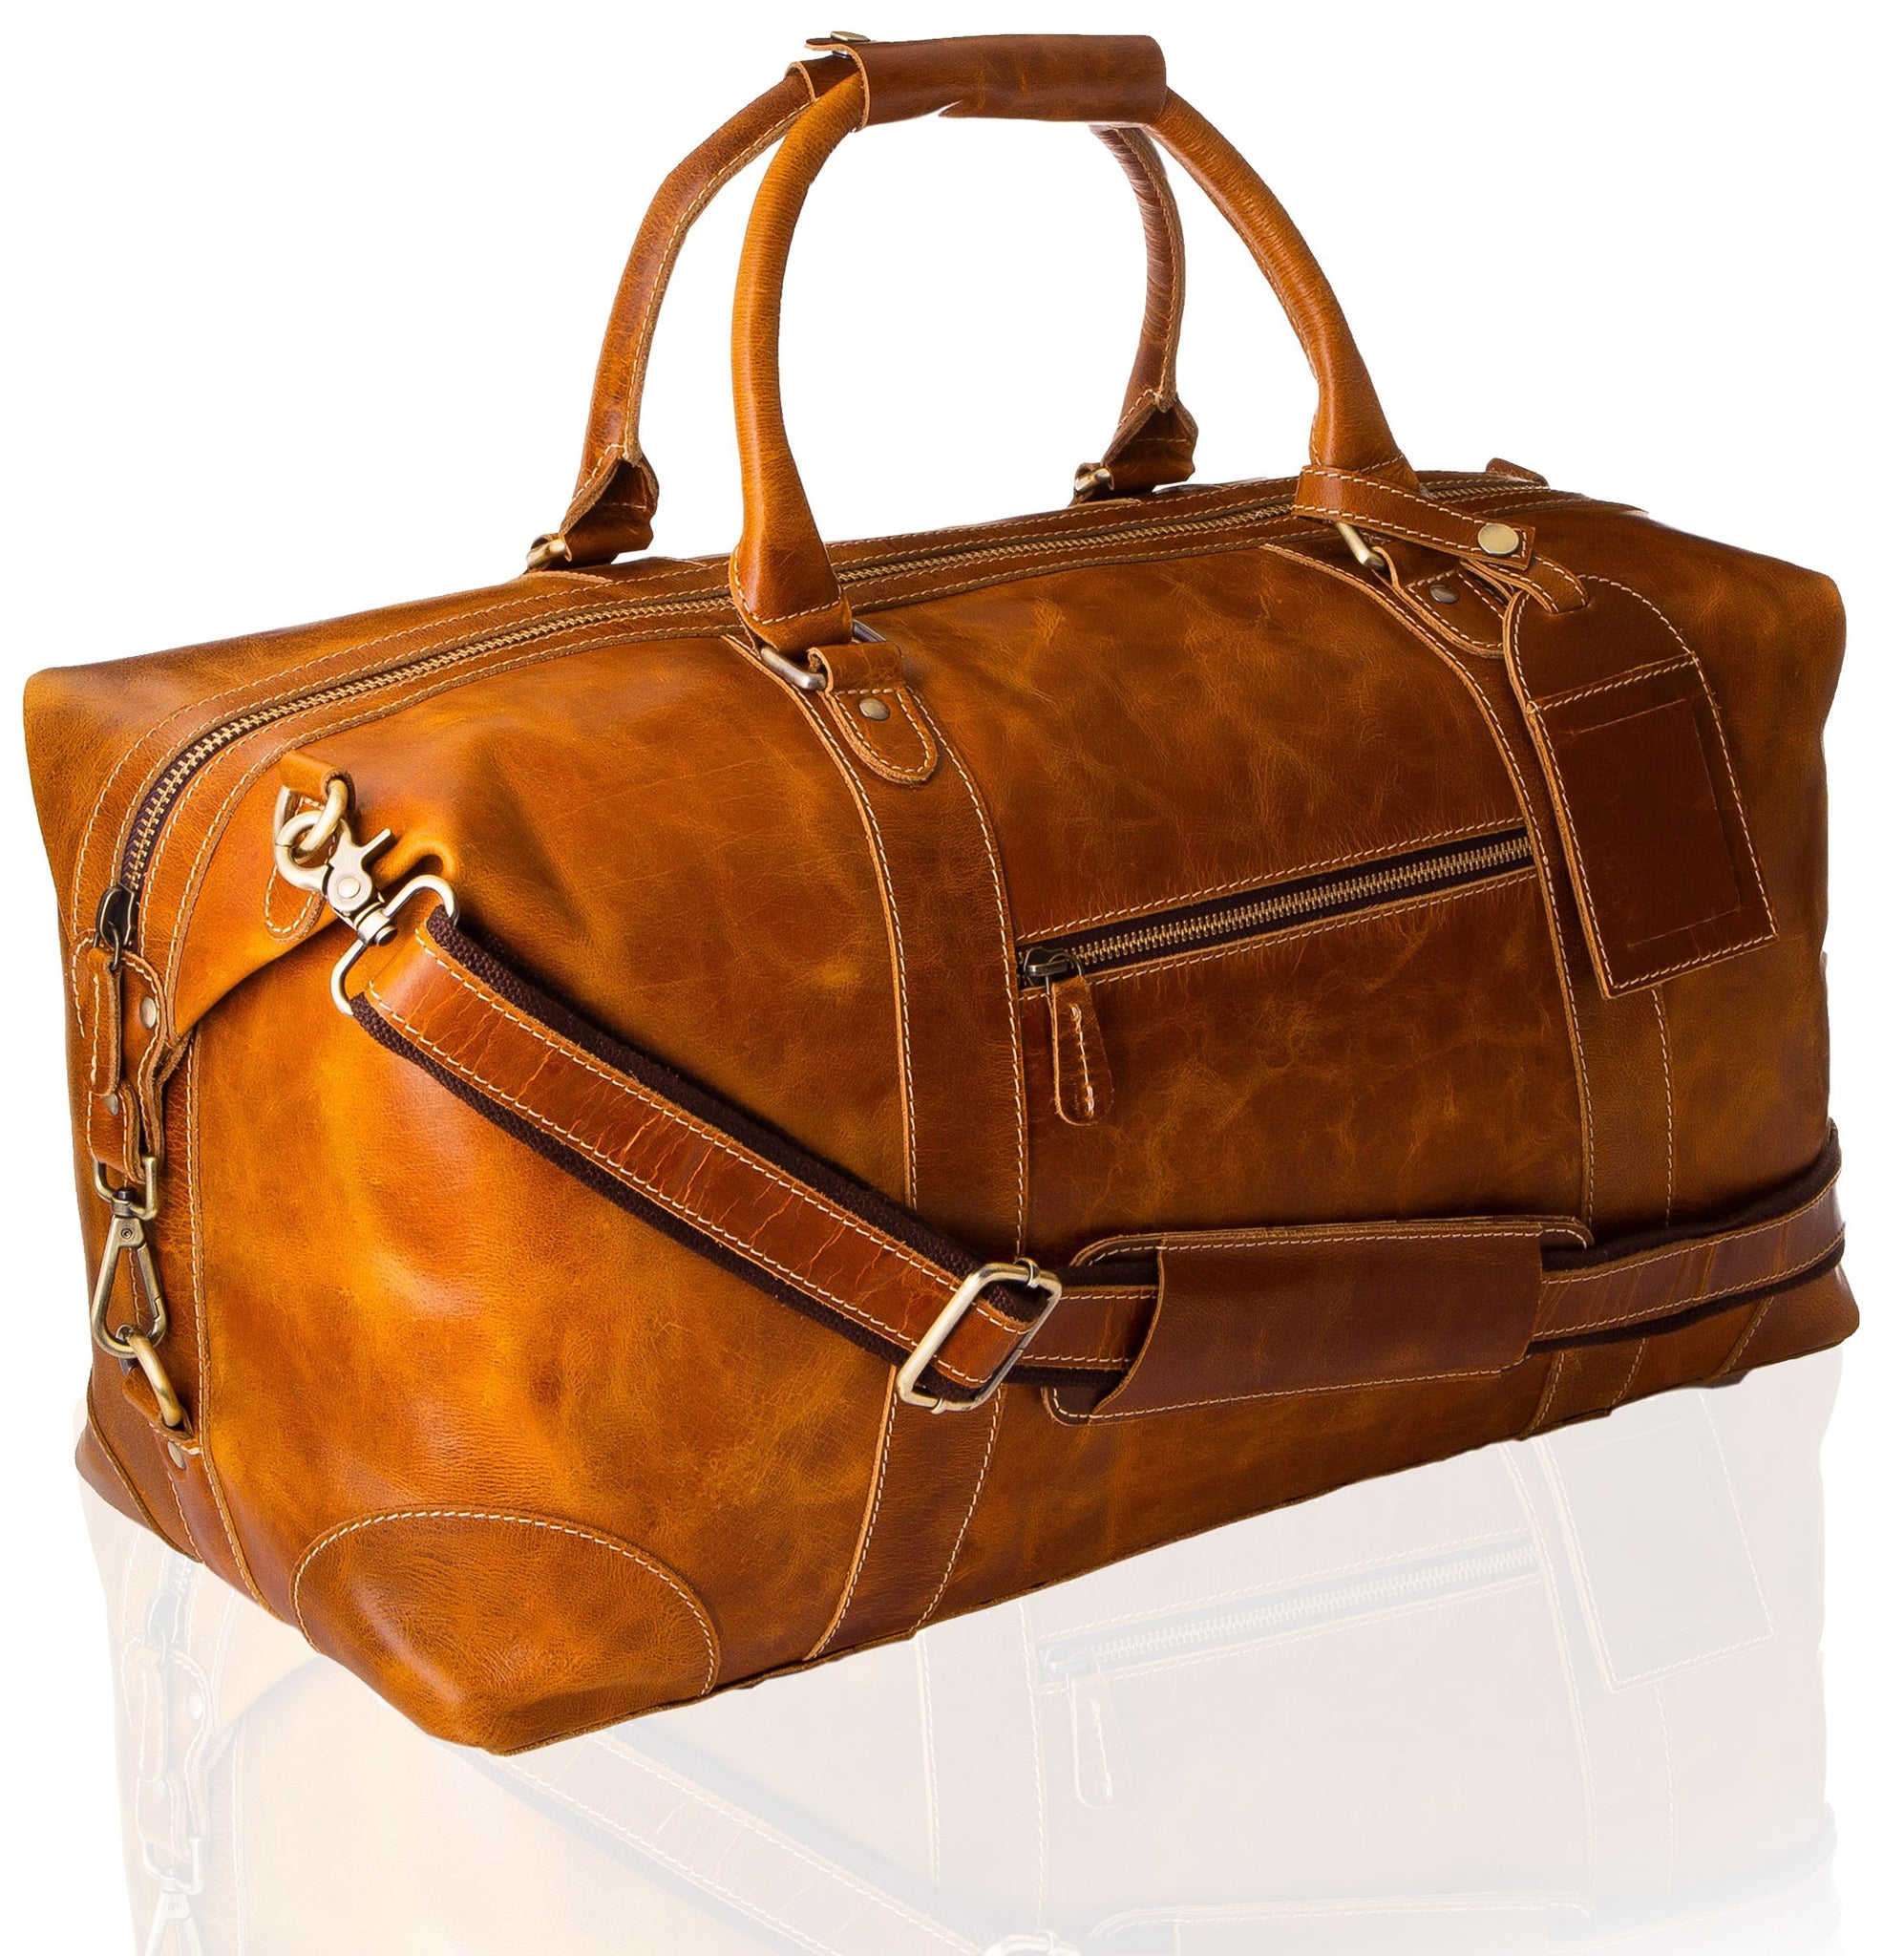 Buy Teakwood Unisex Genuine Leather Duffle Travel Bag | Travelling Bag for  Men/Women at Amazon.in